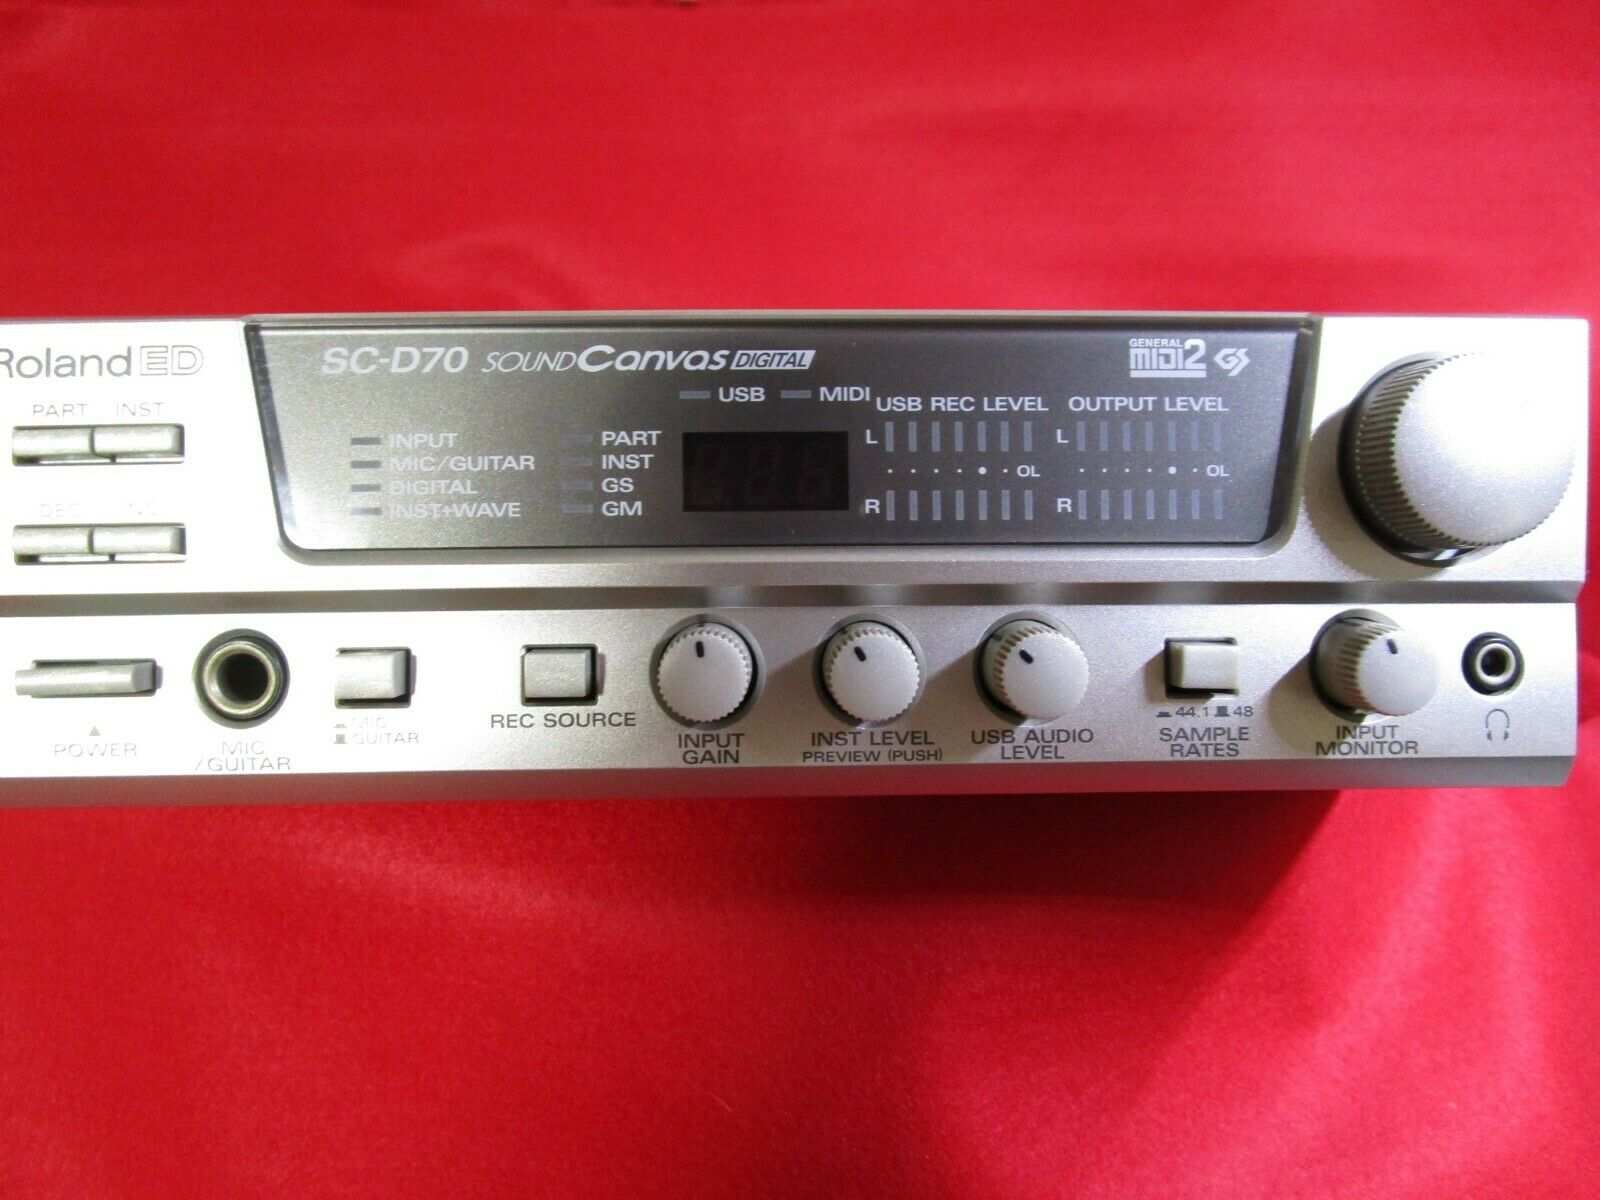 MATRIXSYNTH: ROLAND SC-D70 SOUND MODULE USB MIDI AUDIO INTERFAC